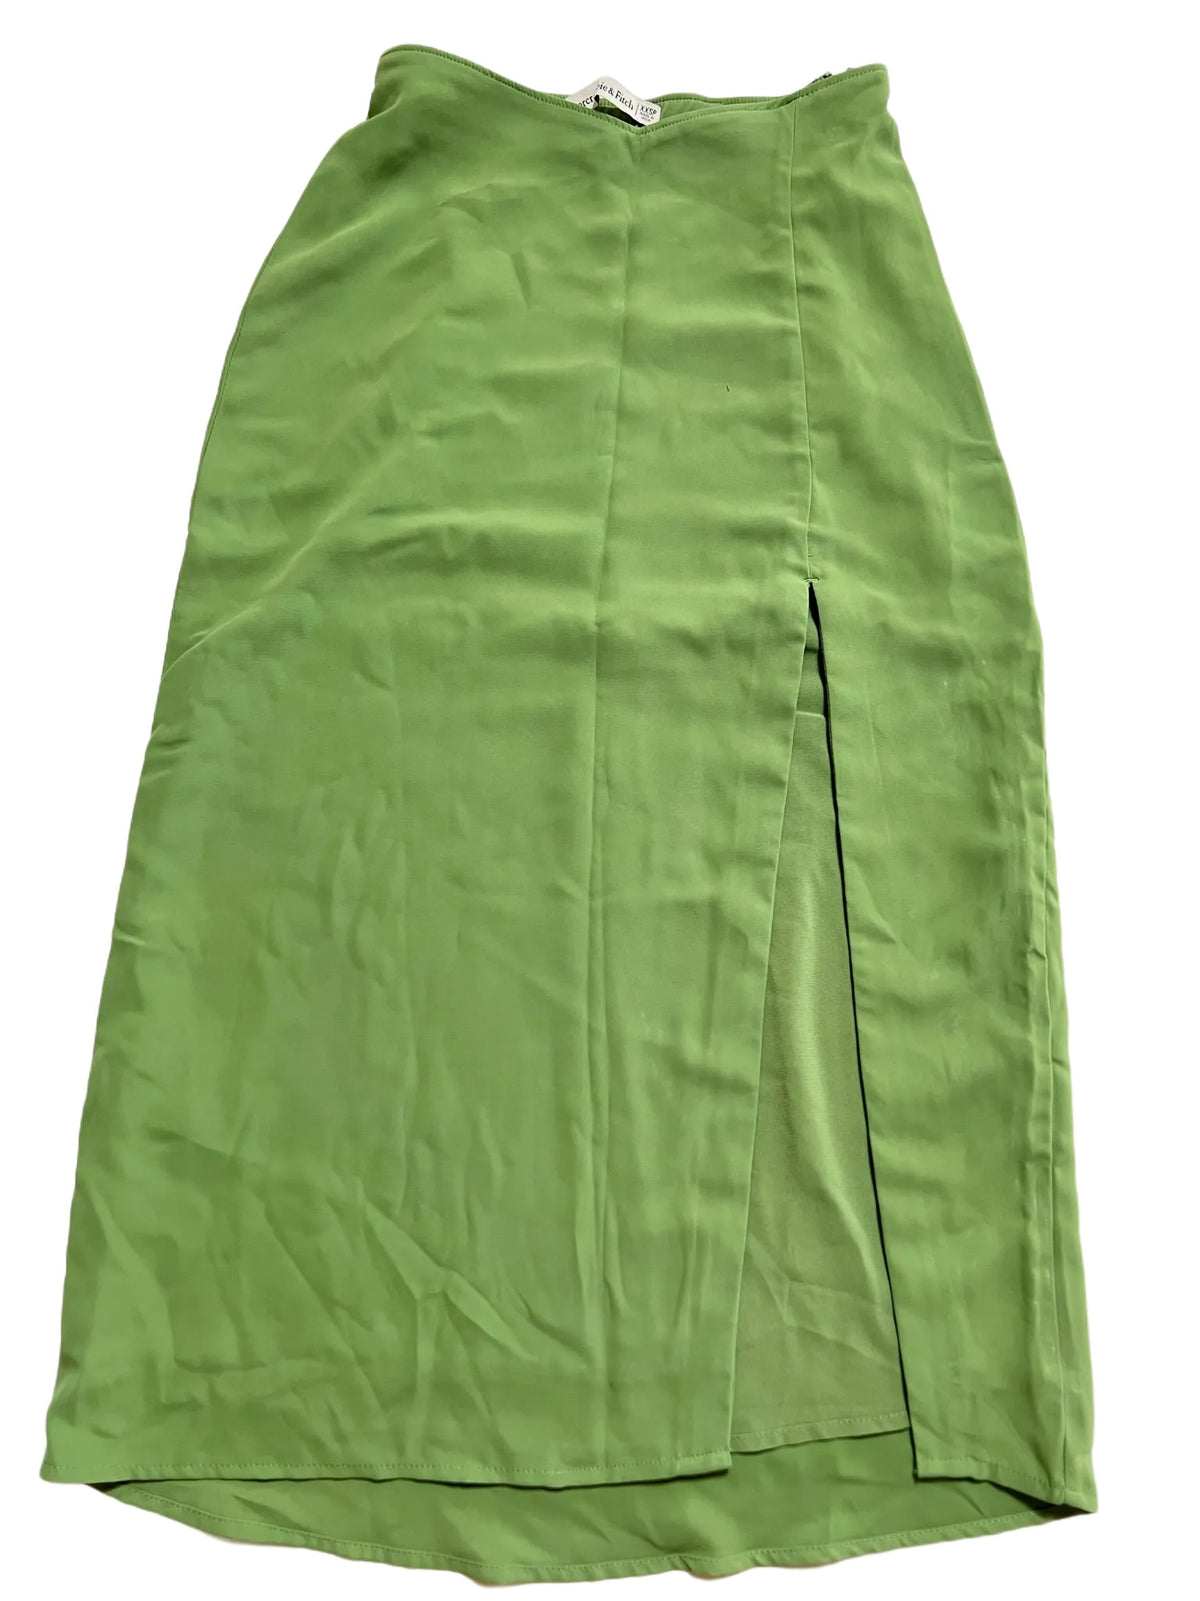 Abercrombie & Fitch- Green Satin Midi Skirt